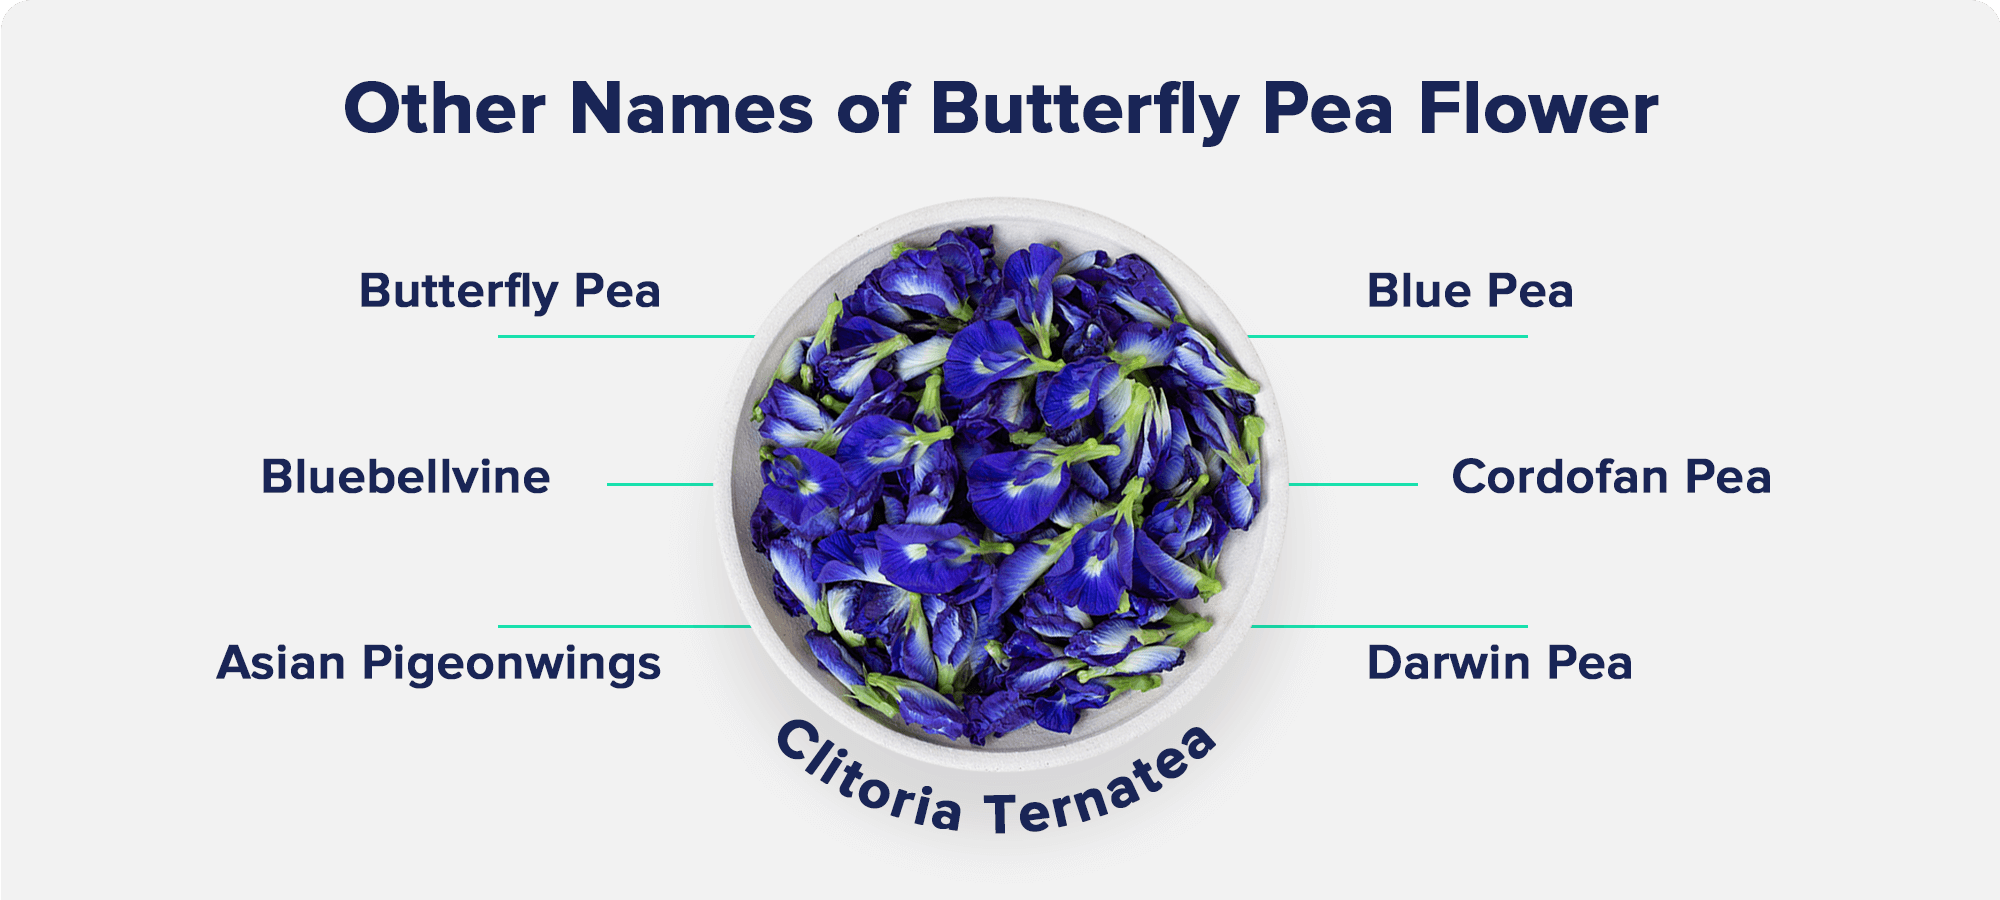 Other names of Butterfly Pea FlowerButterfly Pea, Bluebellvine, Asian Pigeonwings, Blue Pea, Cardofan Pea, and Darwin Pea 